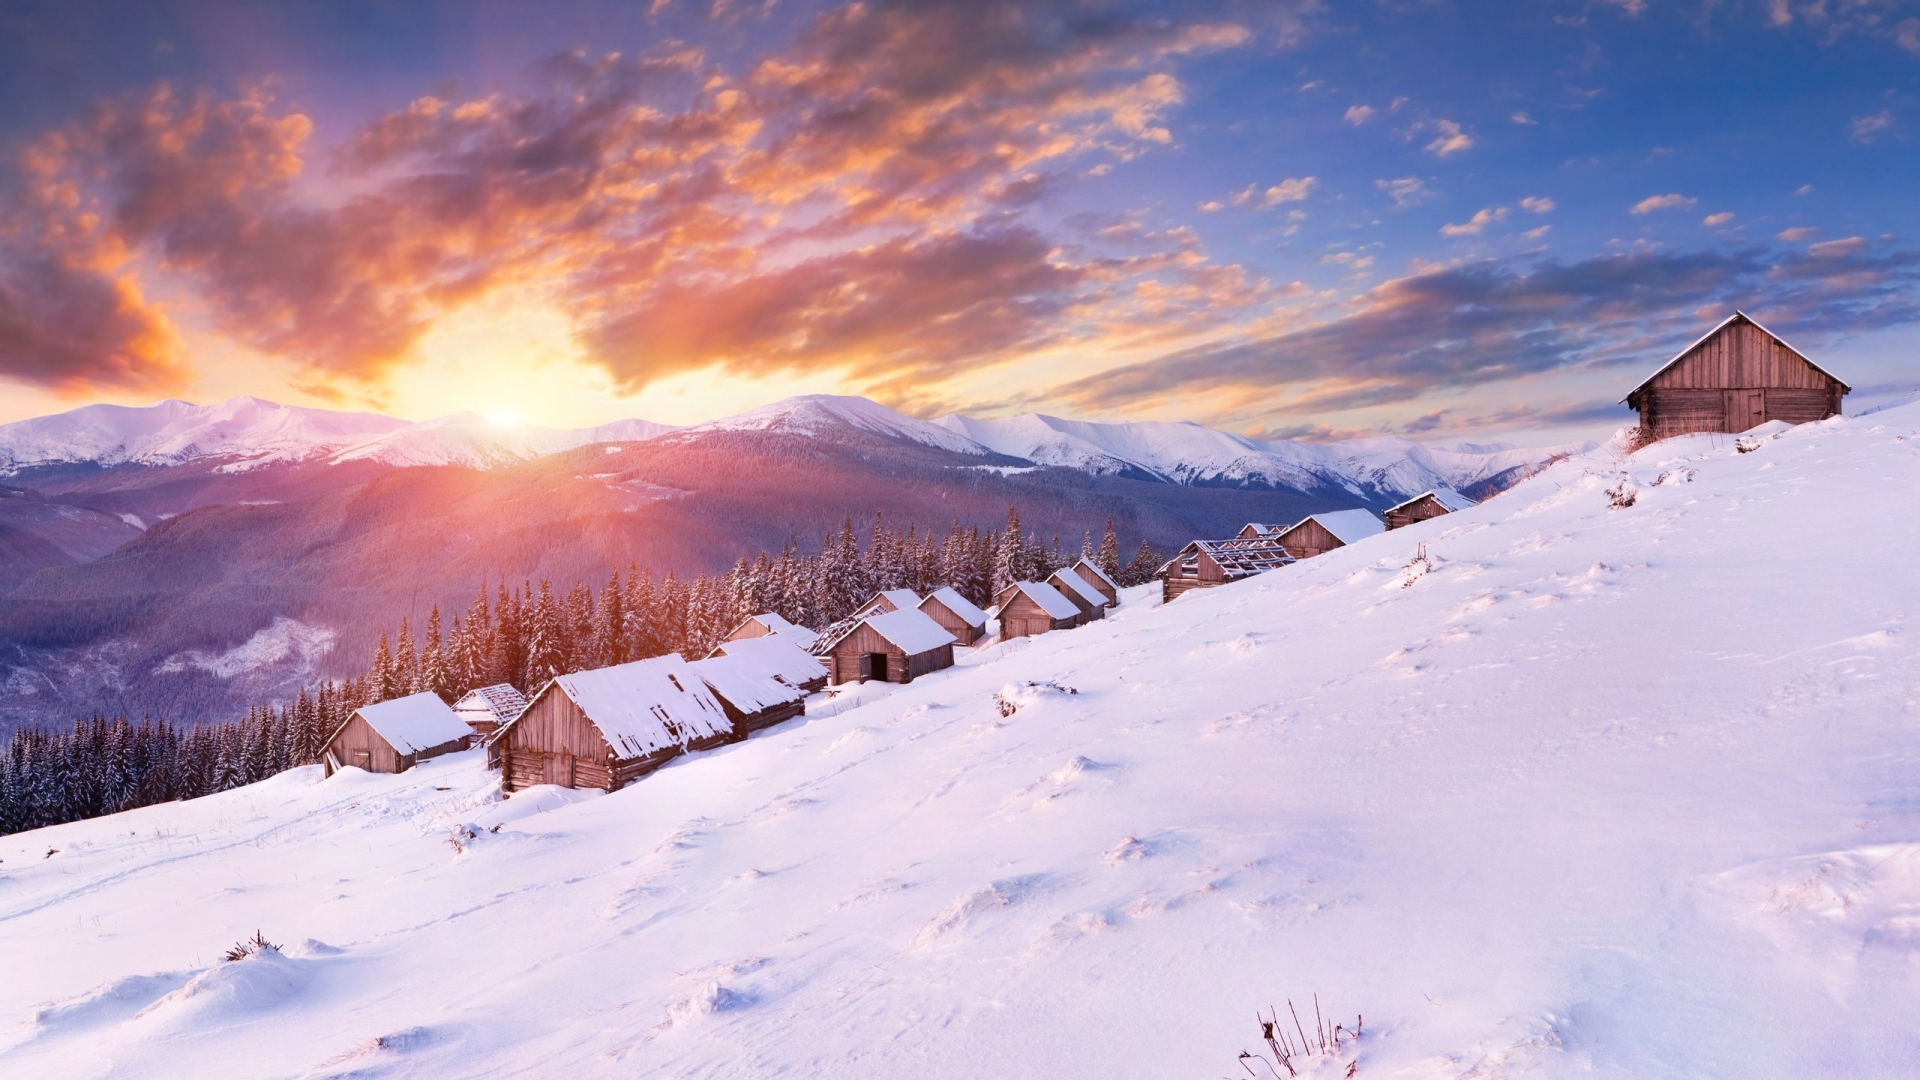 Winter Beautiful Sunset for 1920 x 1080 HDTV 1080p resolution